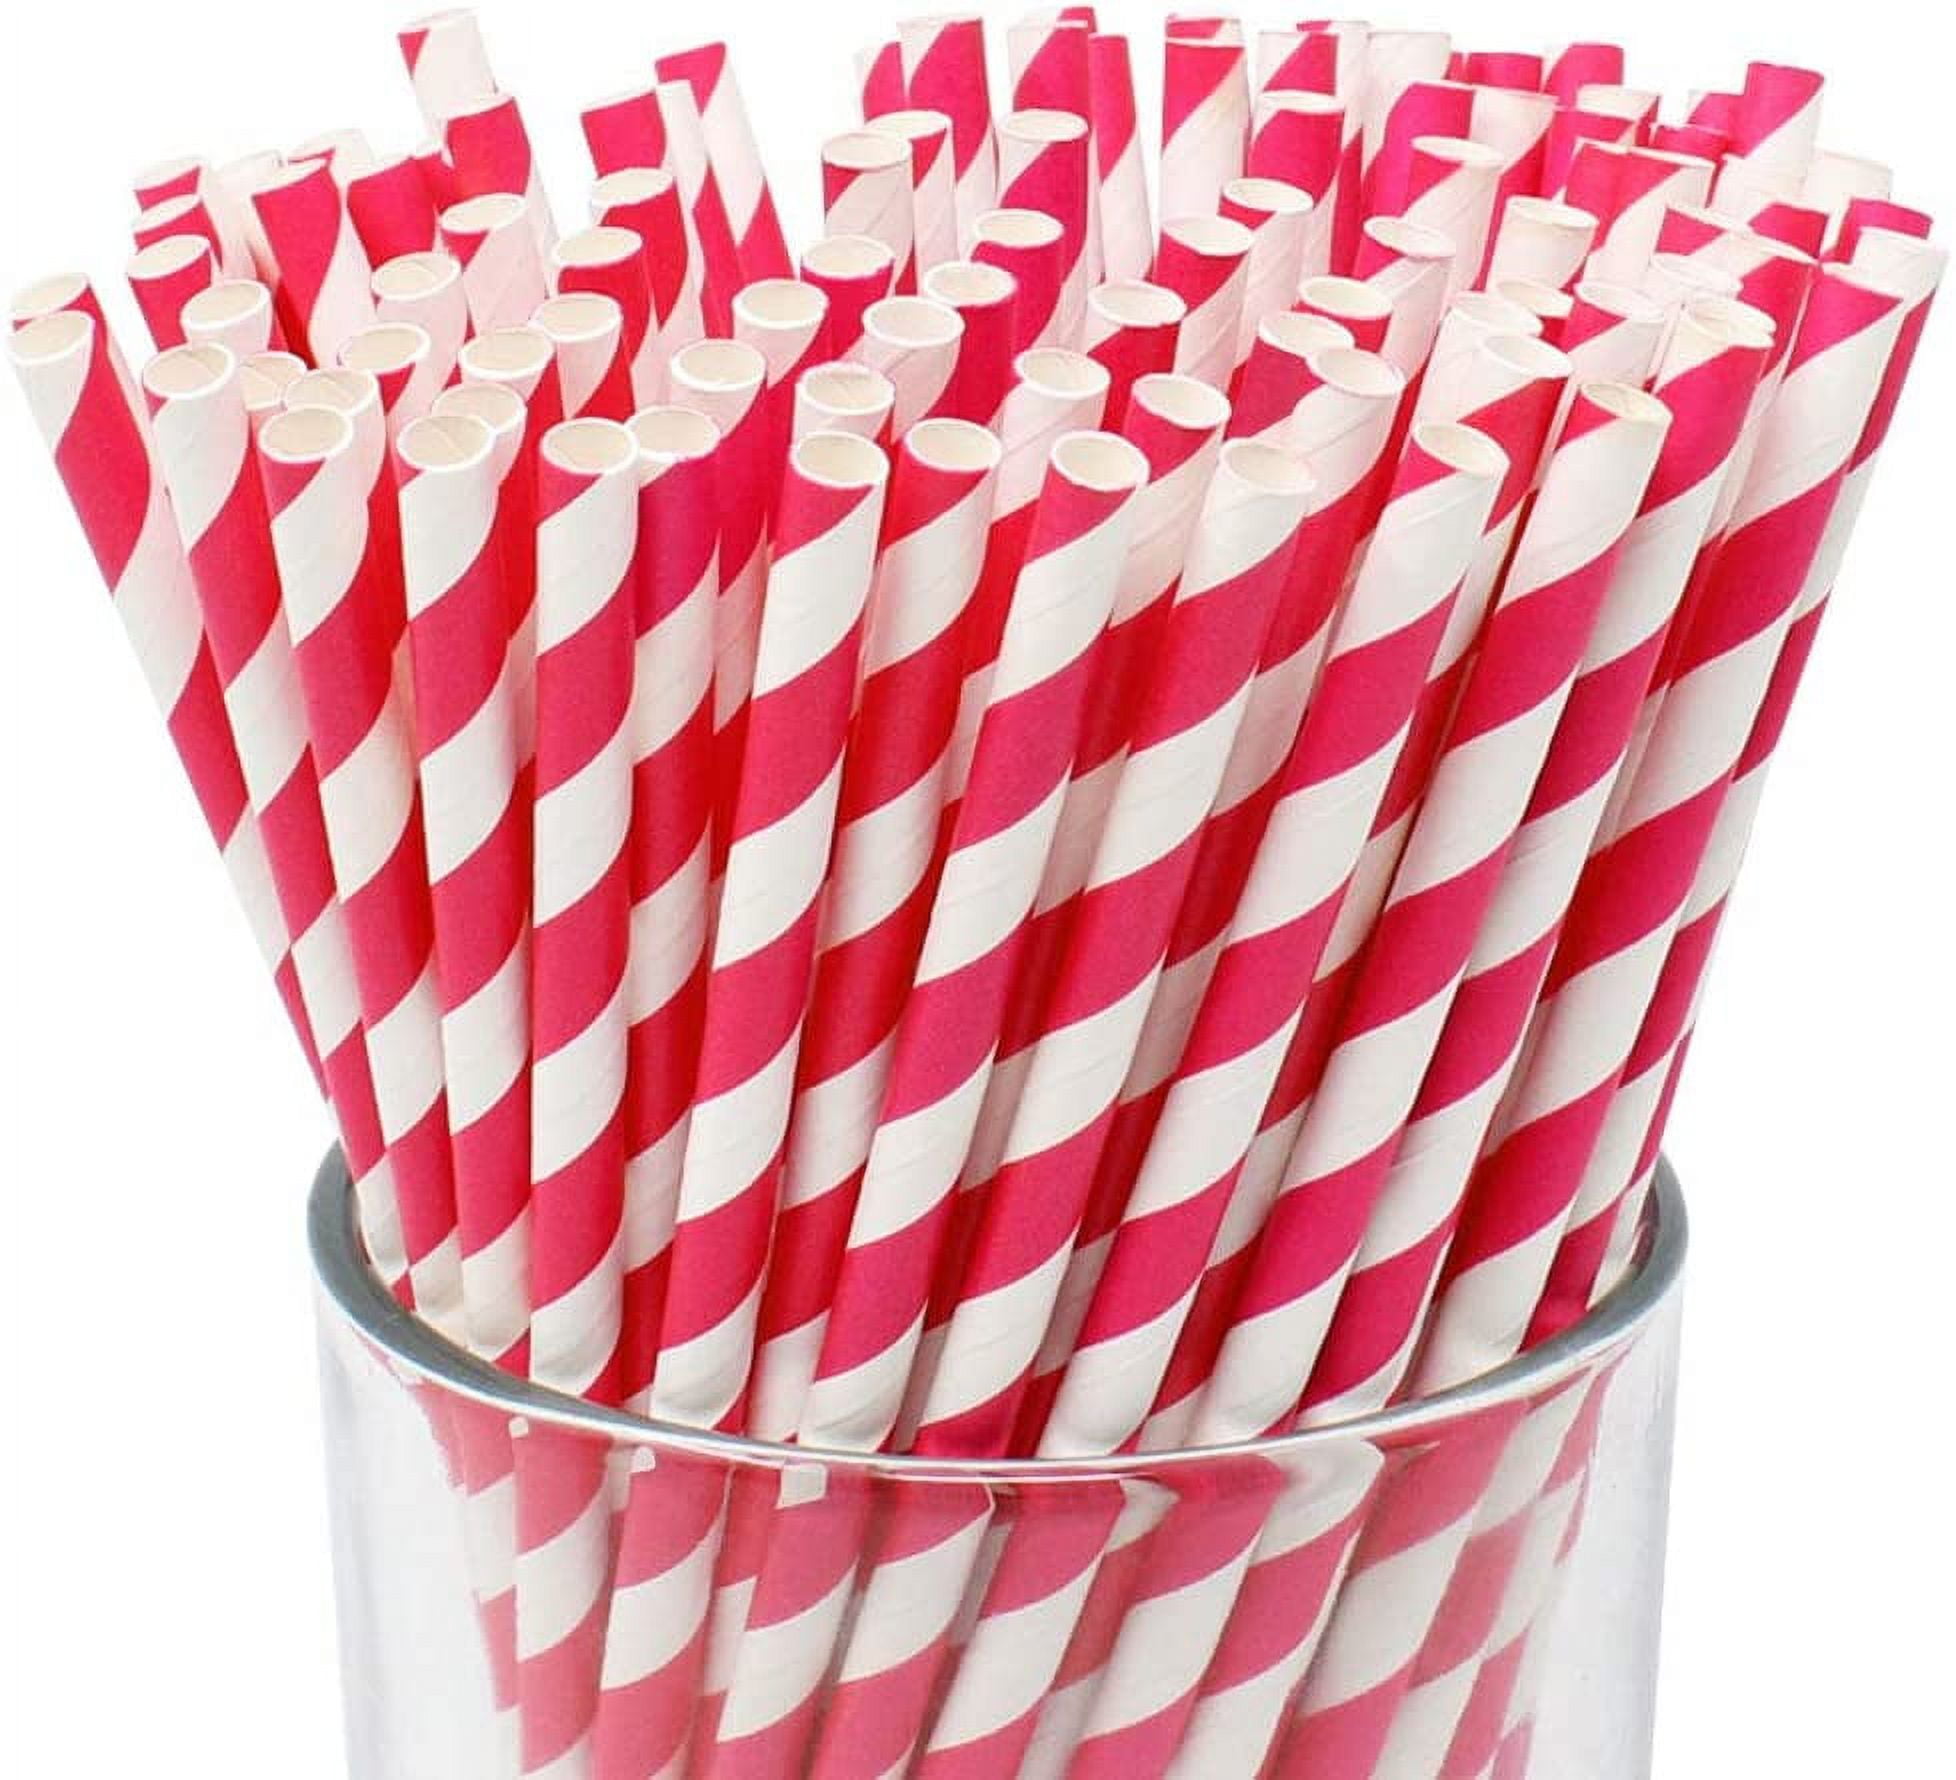 Nogis 100pcs Biodegradable Paper Straws Bulk, Red Striped Drinking Straws for Juice, Shakes, Cocktail, Coffee,Soda, Milkshakes, Smoothies,Celebration